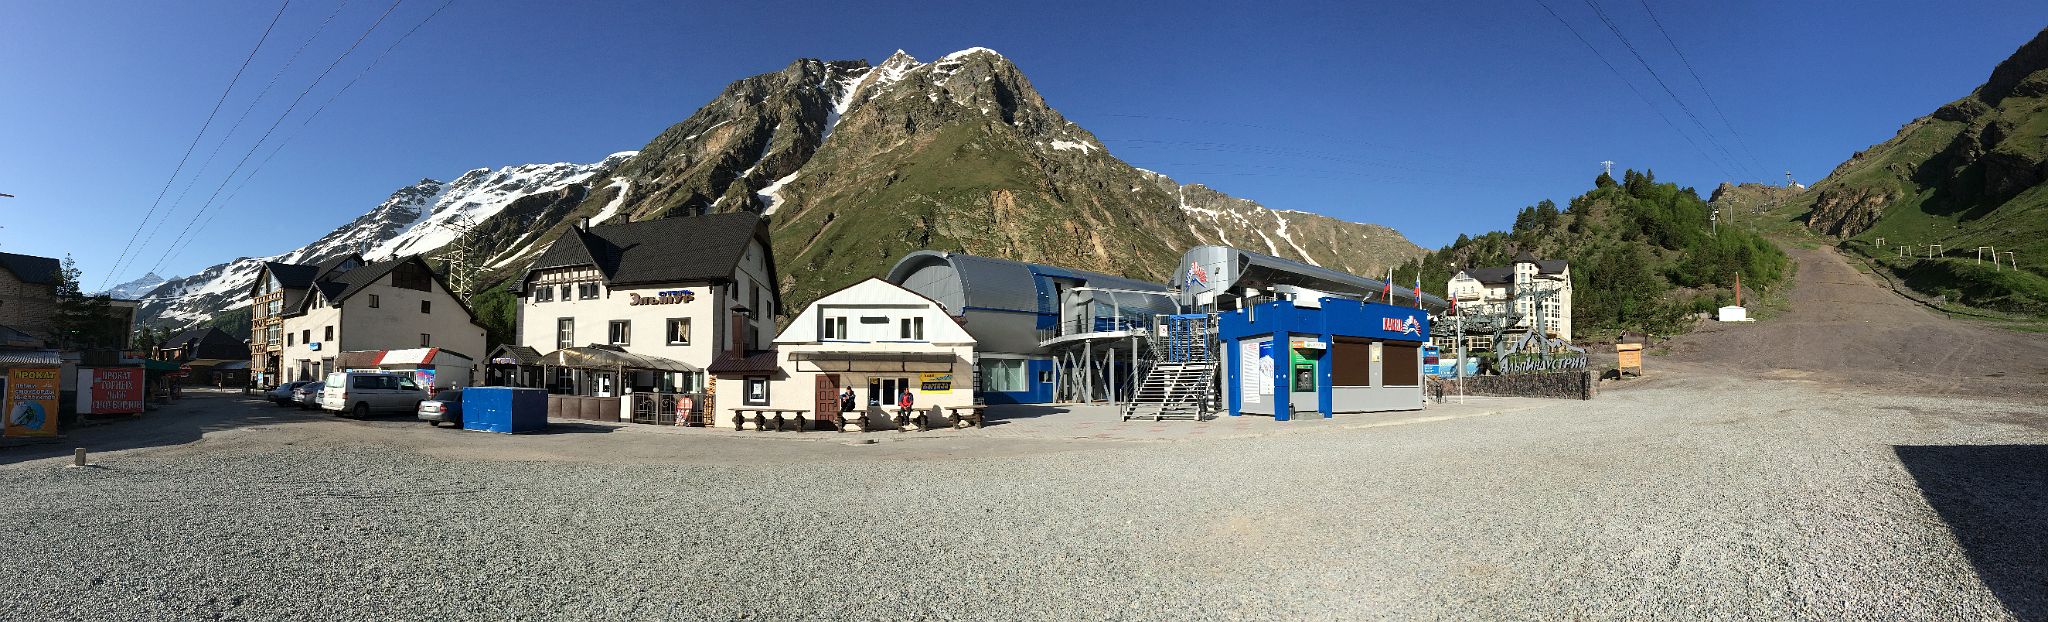 06B Azau Village Cable Car Area Before The Mount Elbrus Climb